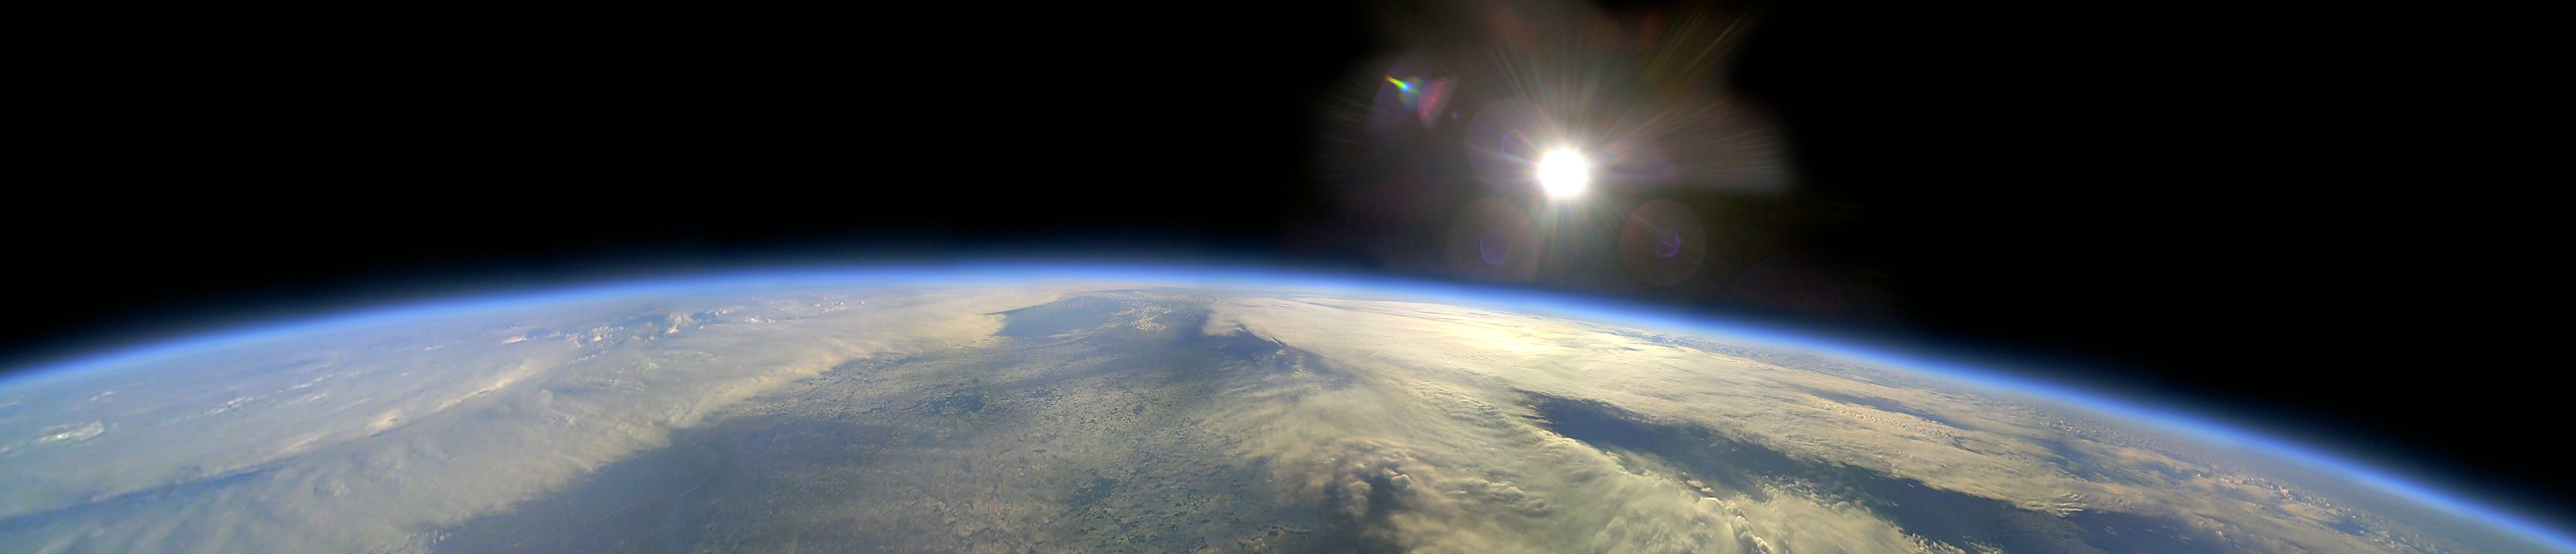 Земля из космоса панорама